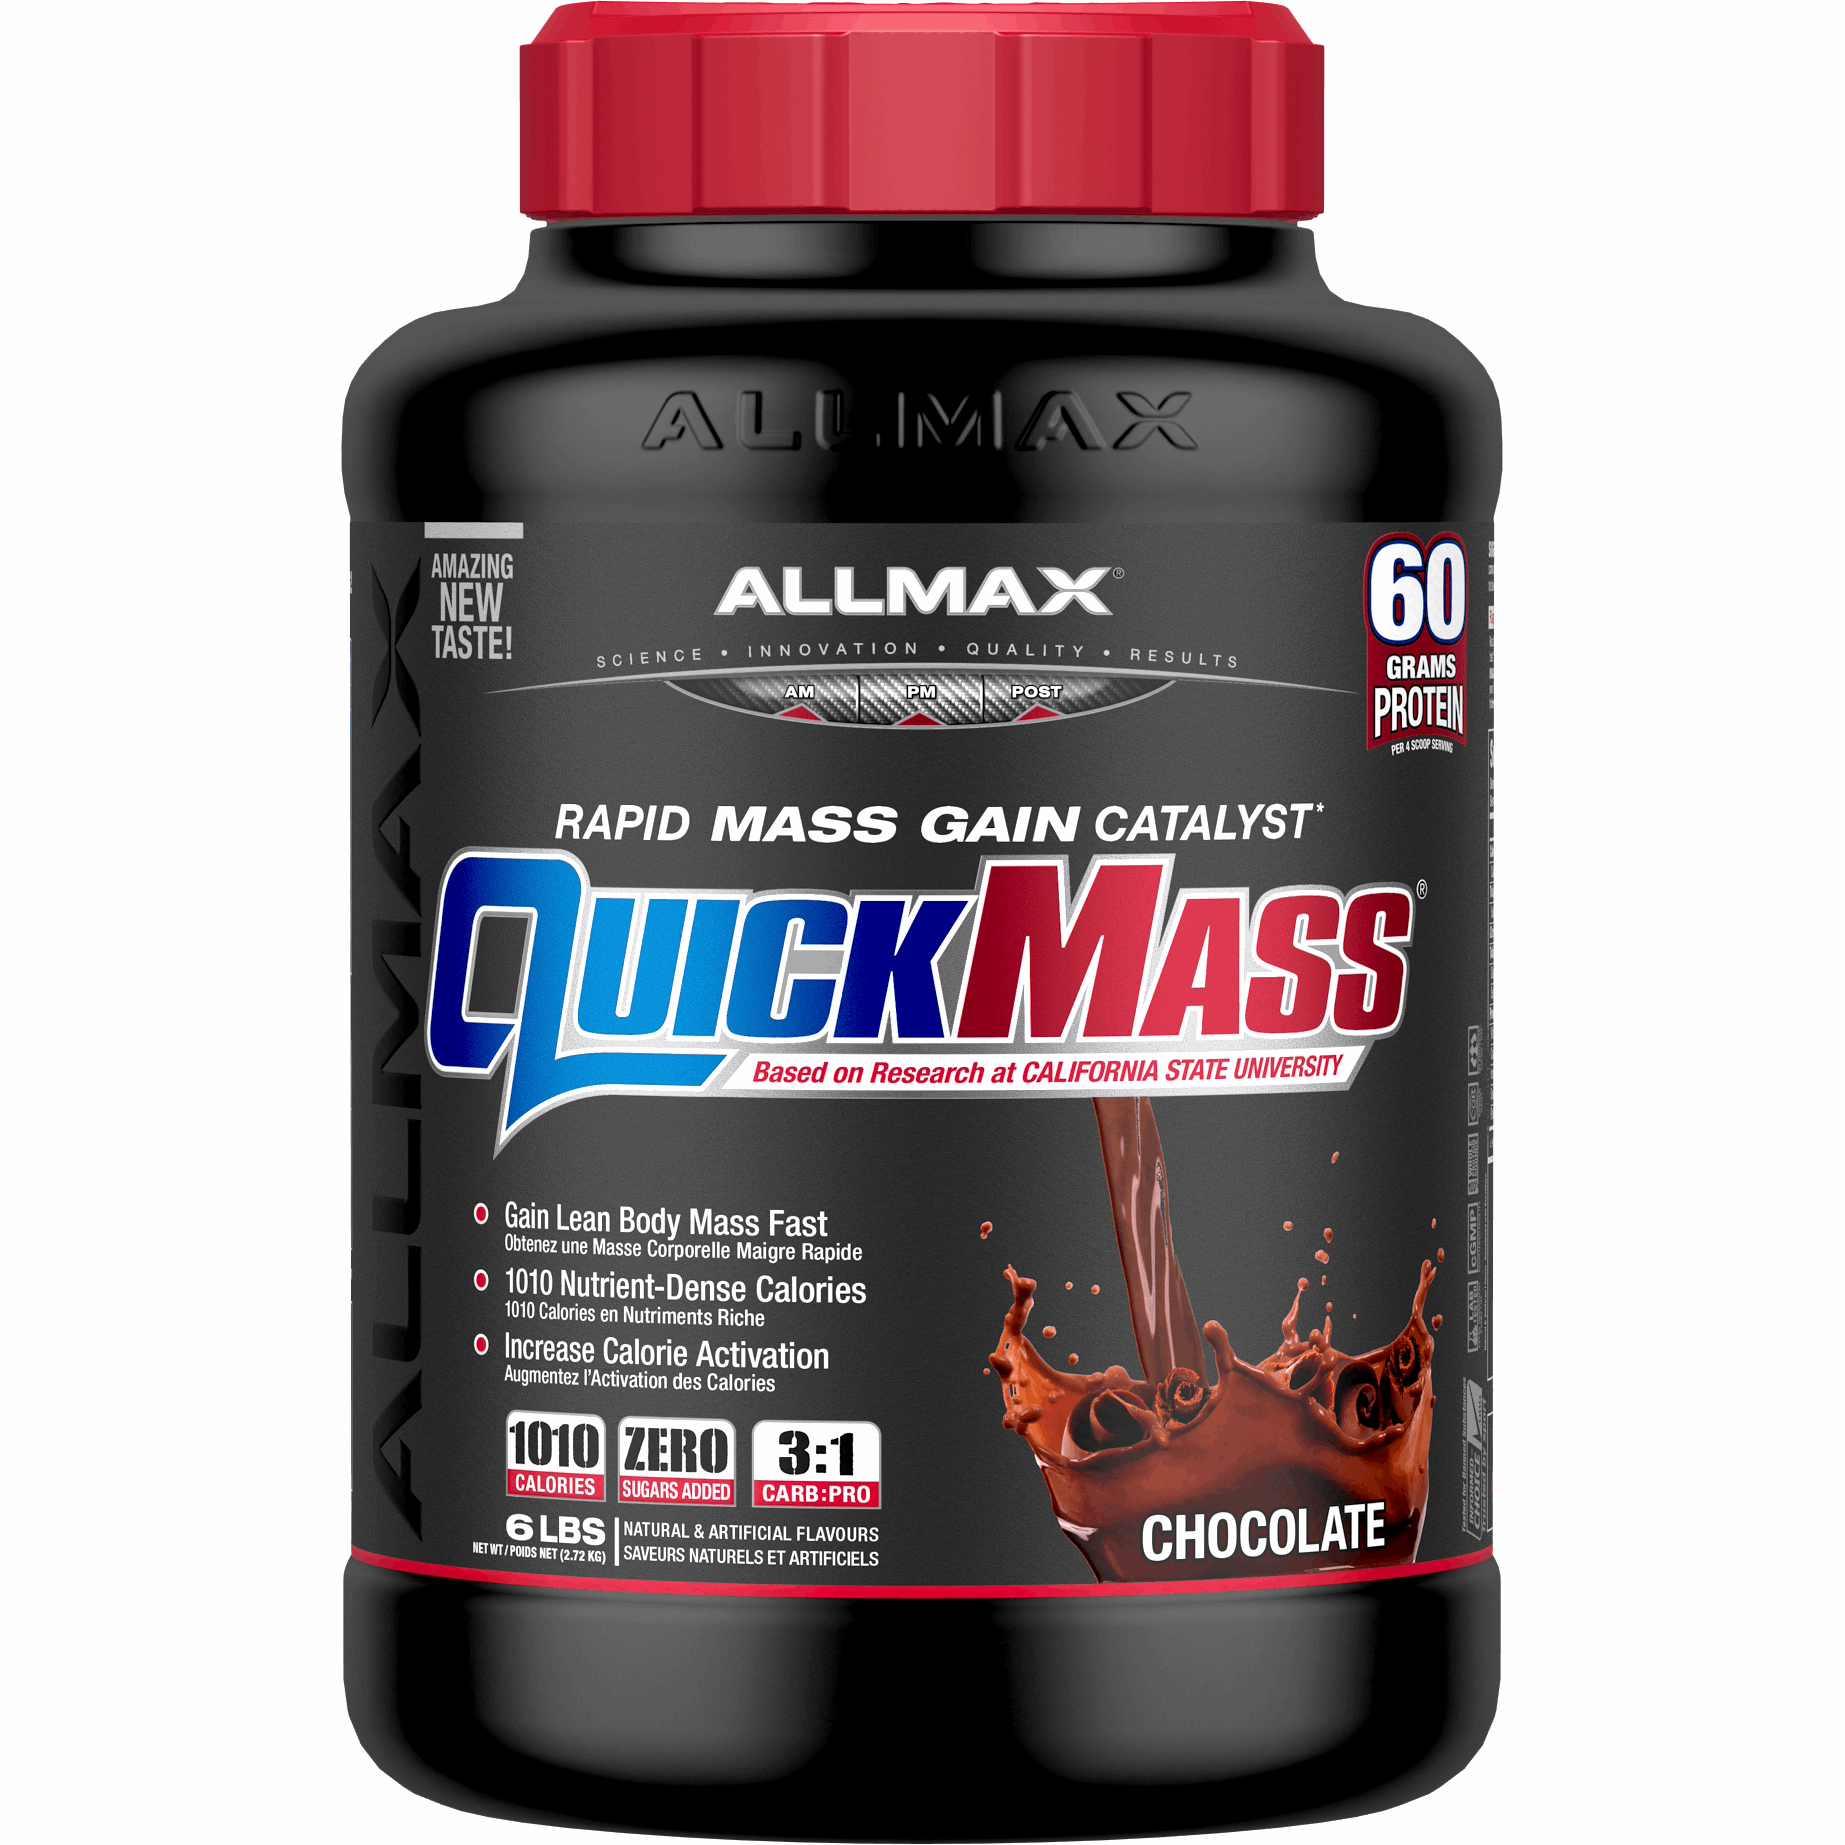 ALLMAX Quickmass (6 LBS) Mass Gainers Chocolate Allmax Nutrition